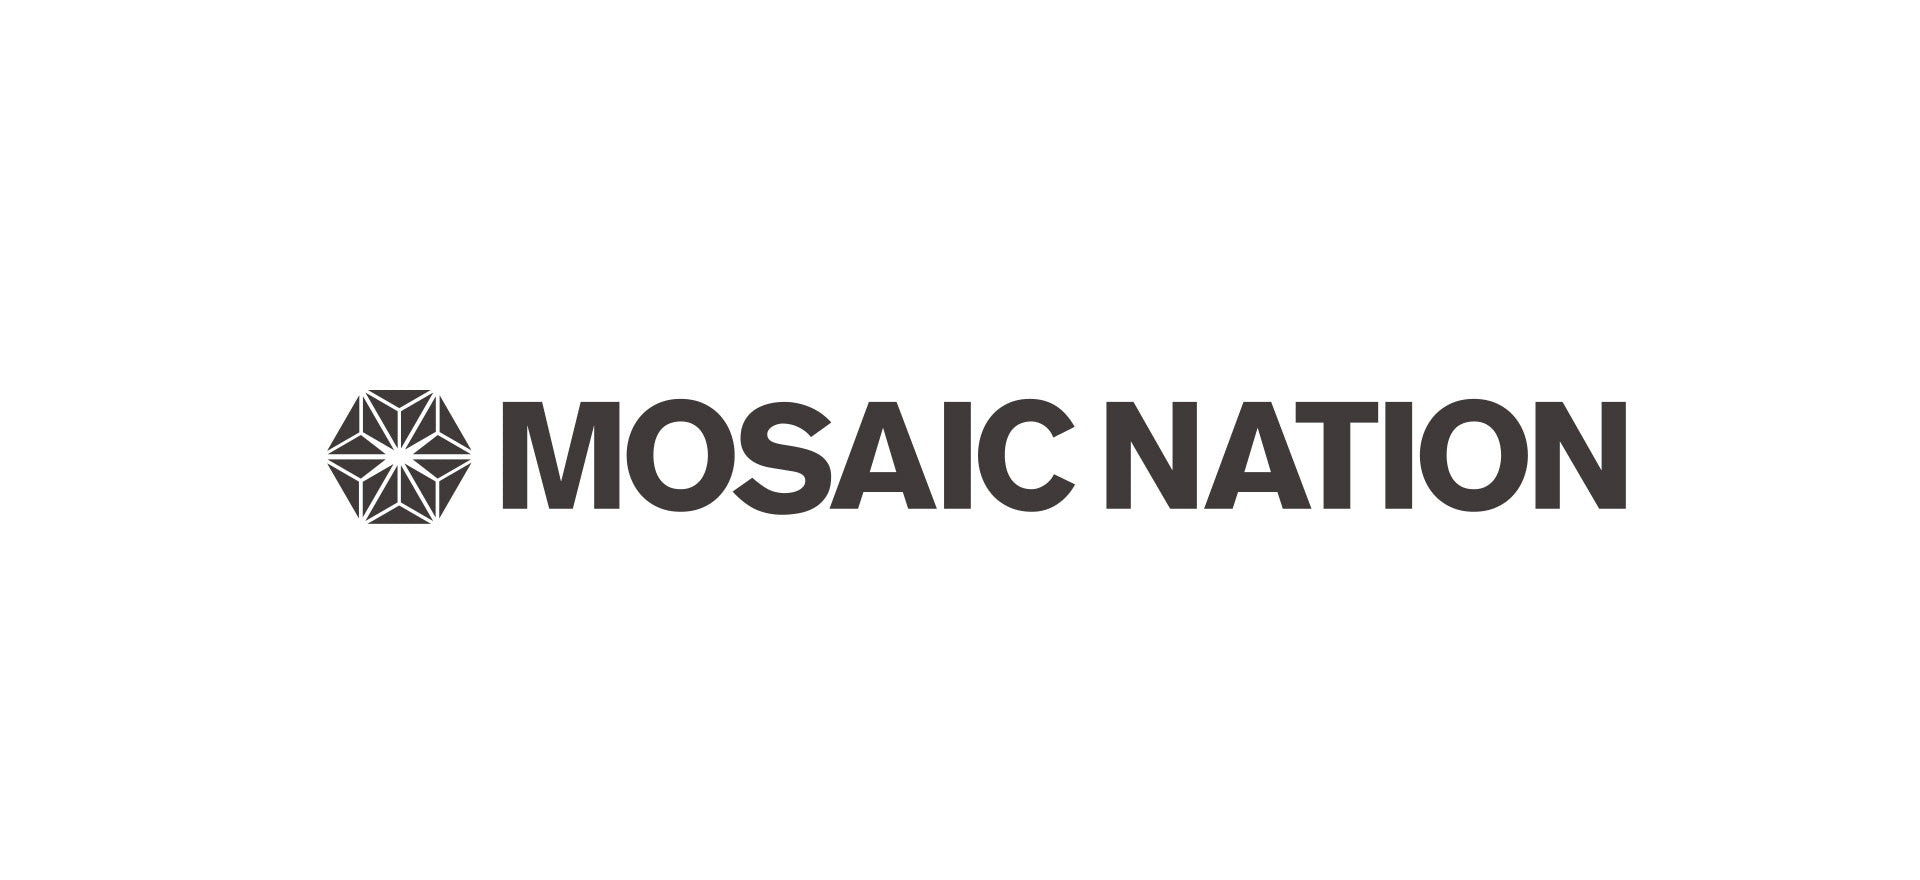 MOSAIC NATION